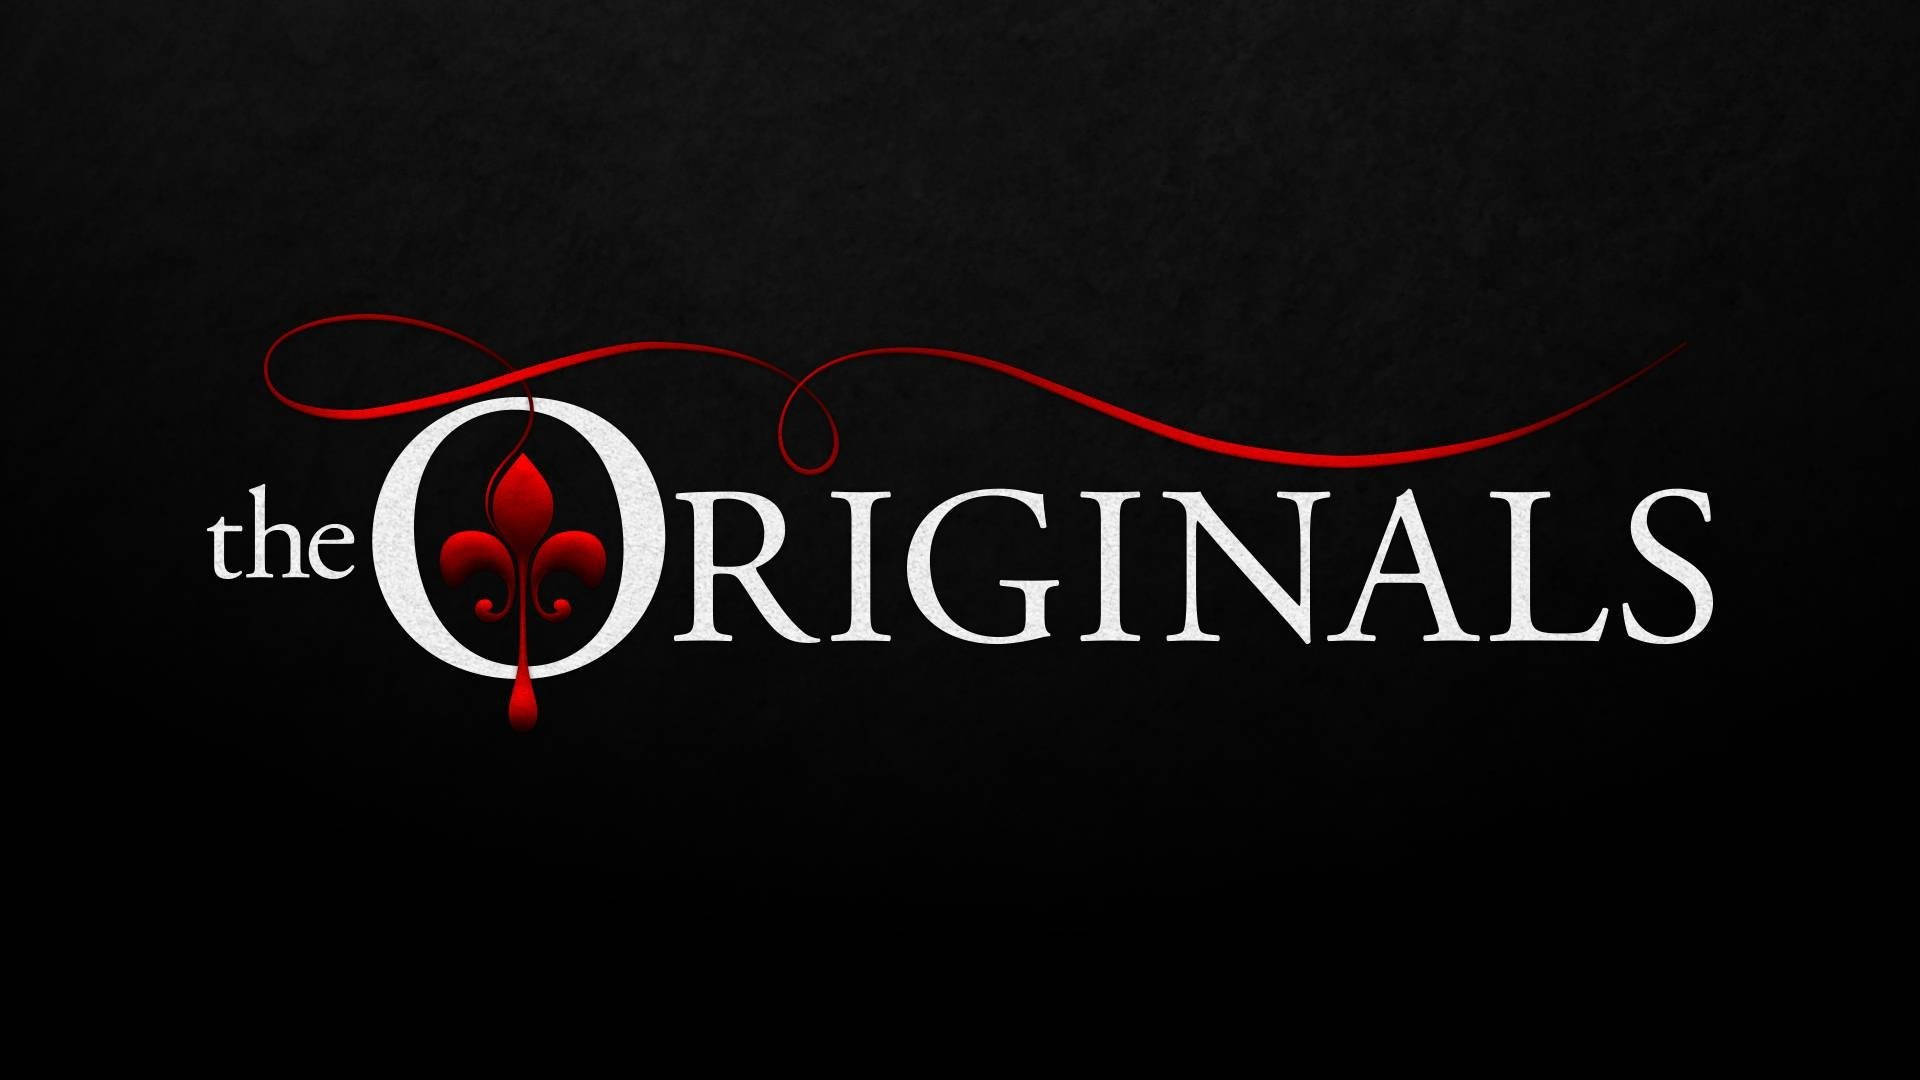 The Originals Title Logo Background